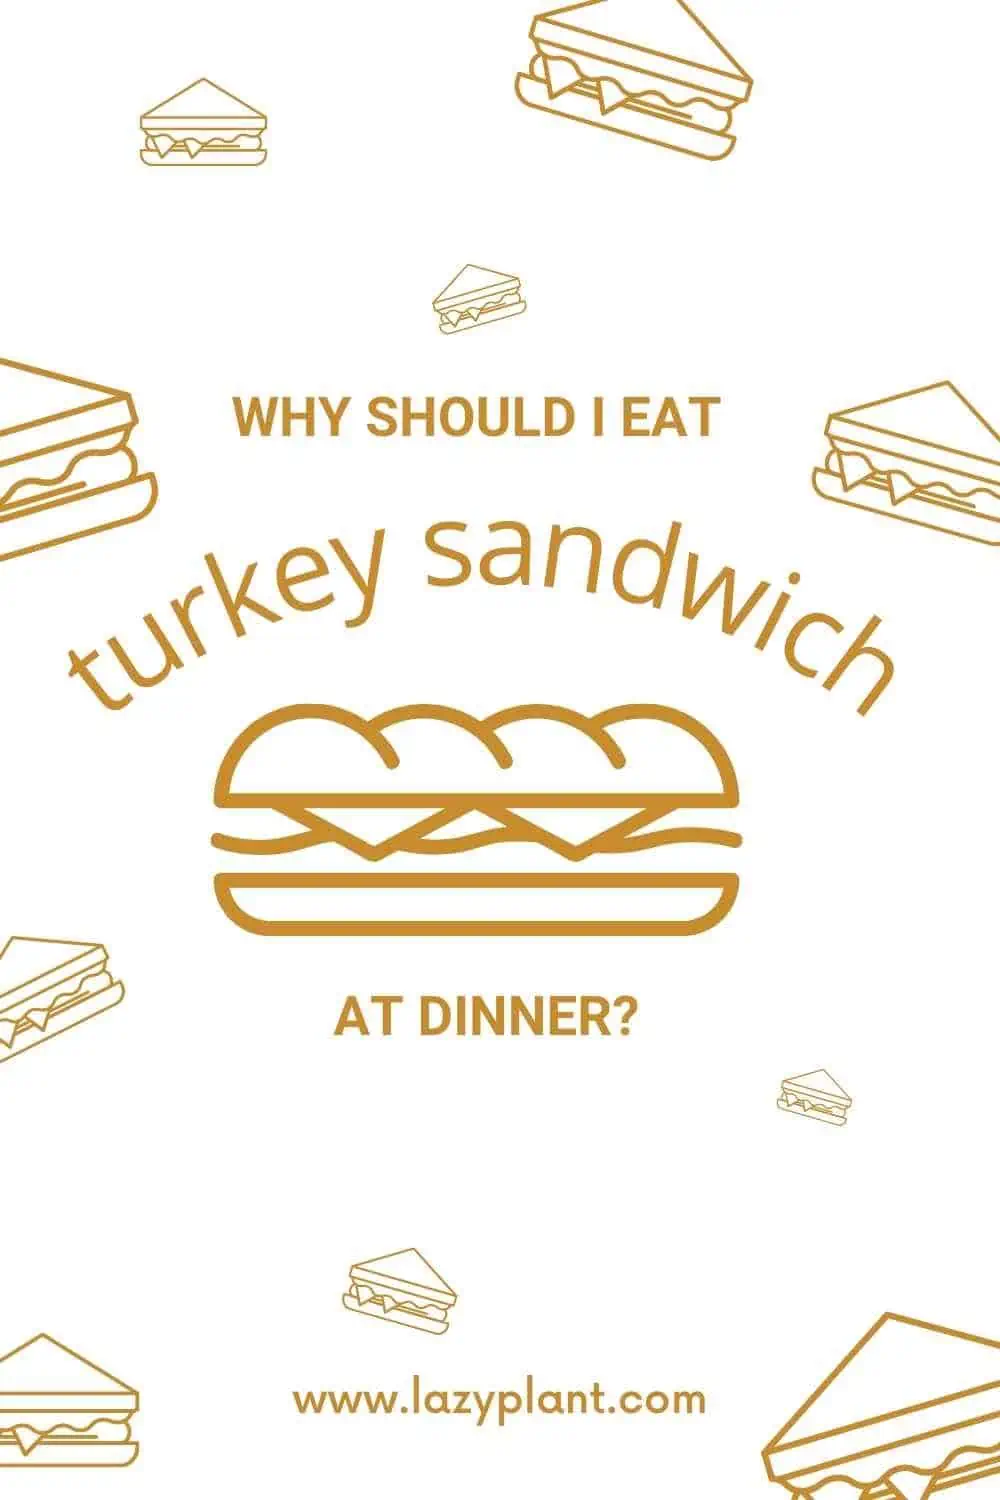 Turkey sandwich supports a good night’s sleep.